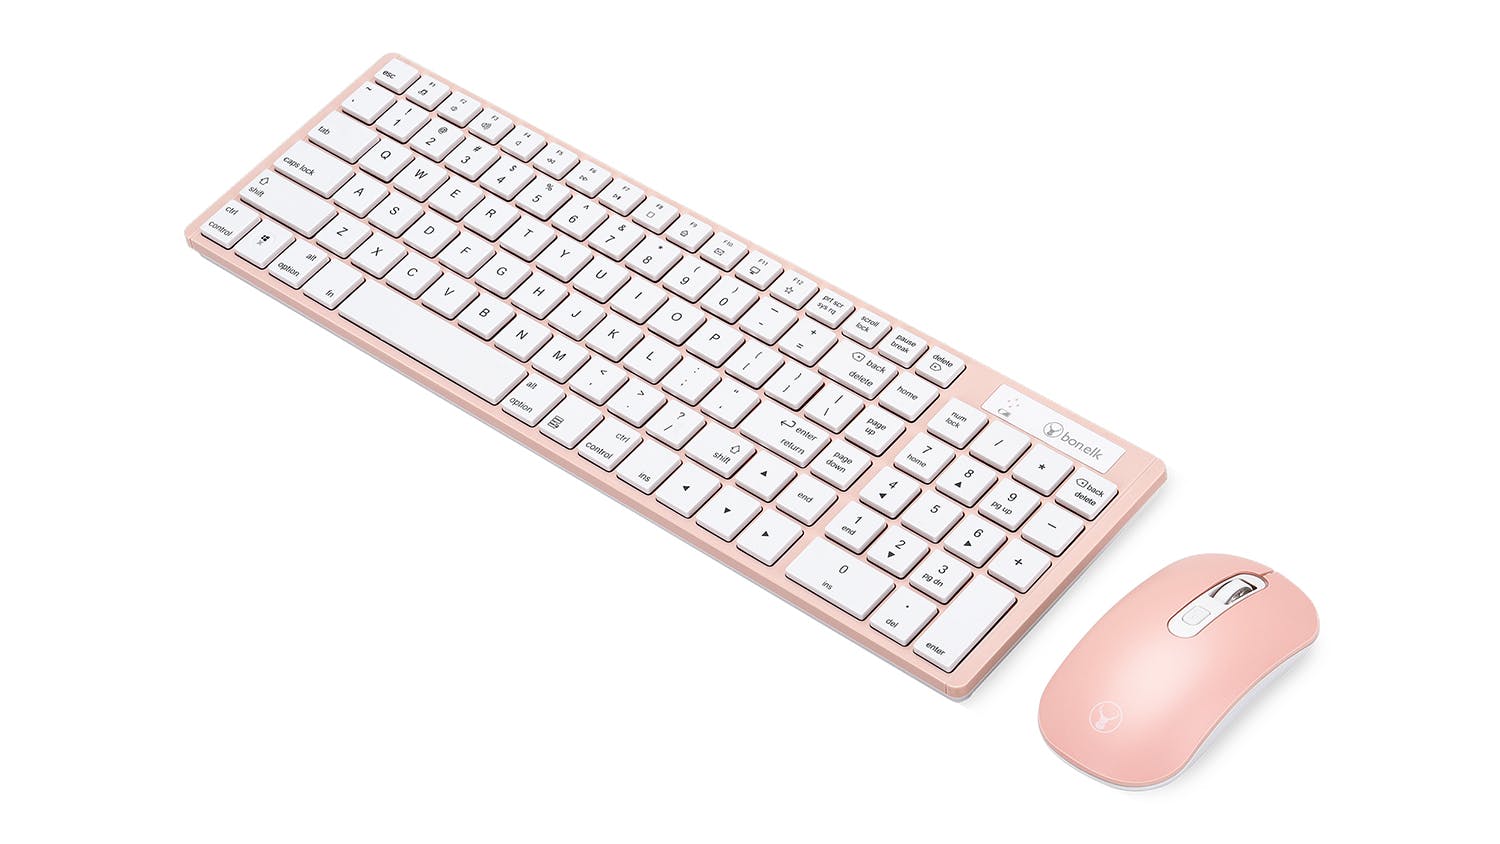 Bon.Elk Slim Wireless Keyboard and Mouse Combo KM-322 - Salmon